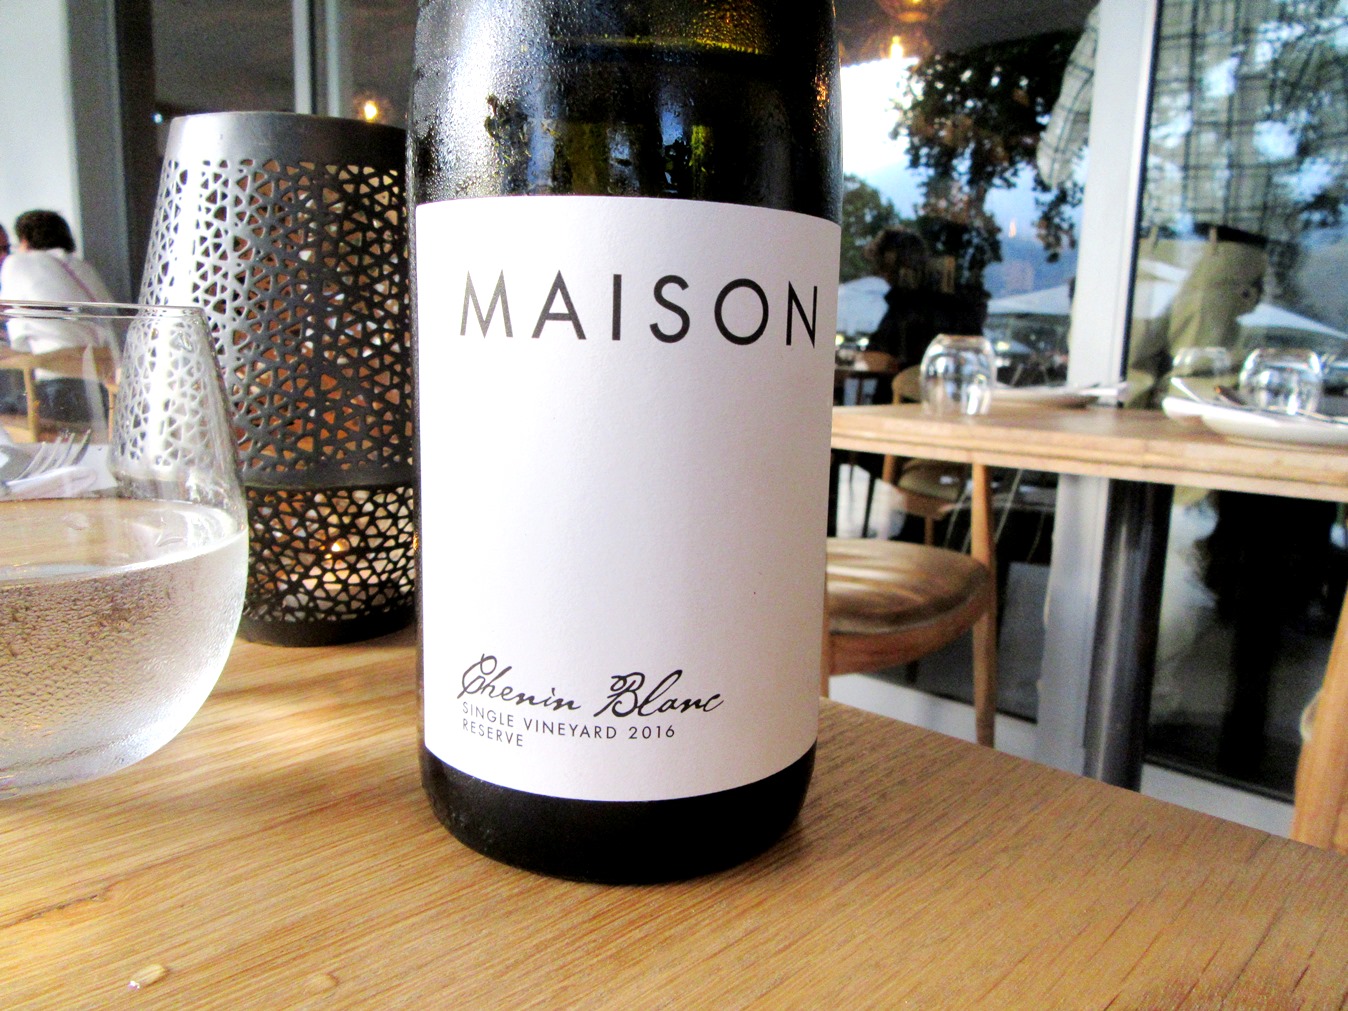 Maison, Single Vineyard Reserve Chenin Blanc 2016, Franschhoek, South Africa, Wine Casual